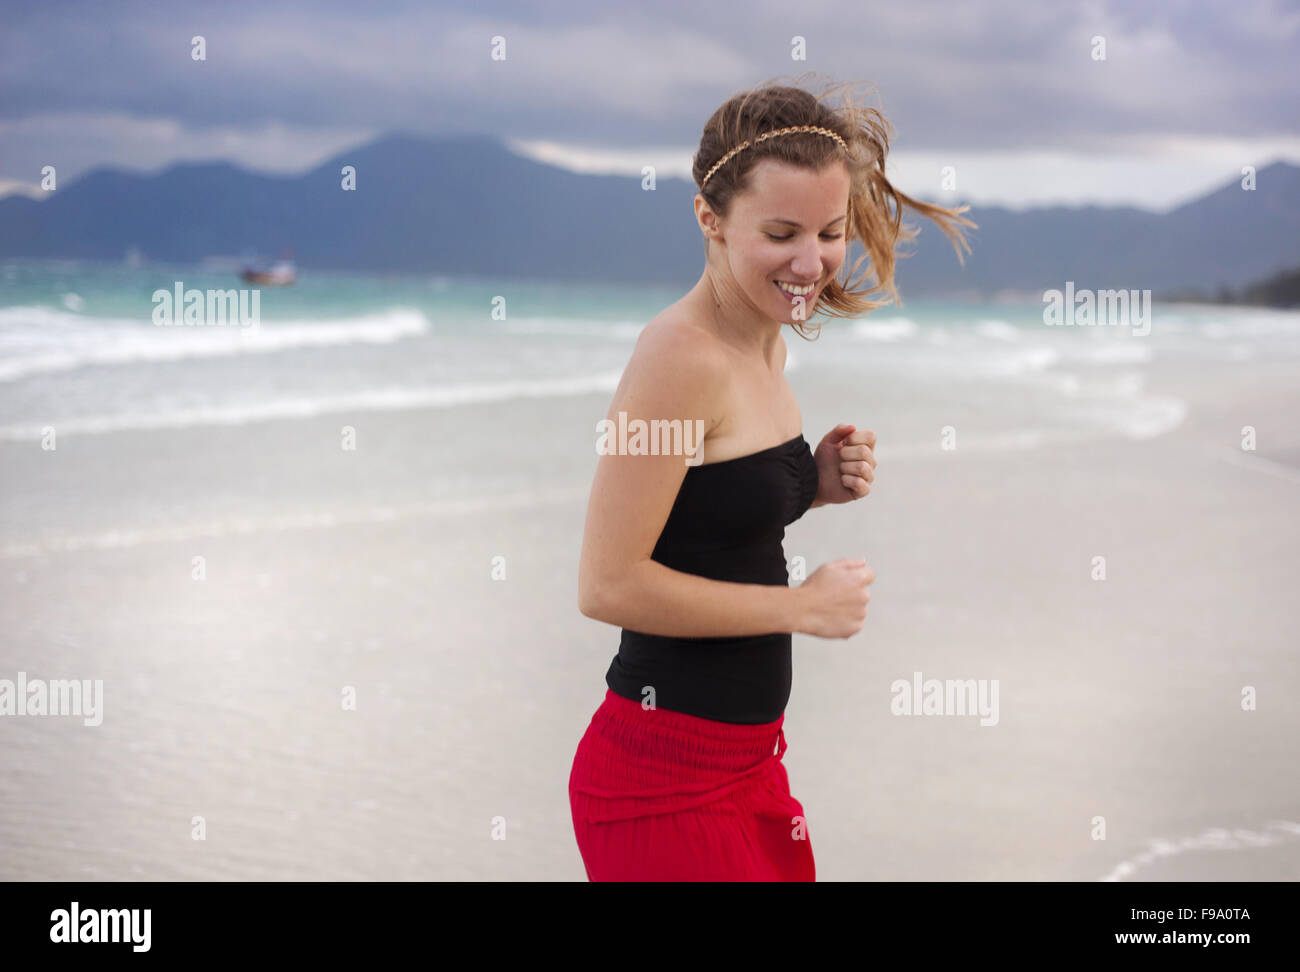 Beautiful young woman is enjoying free time at the beautiful sandy beach Stock Photo